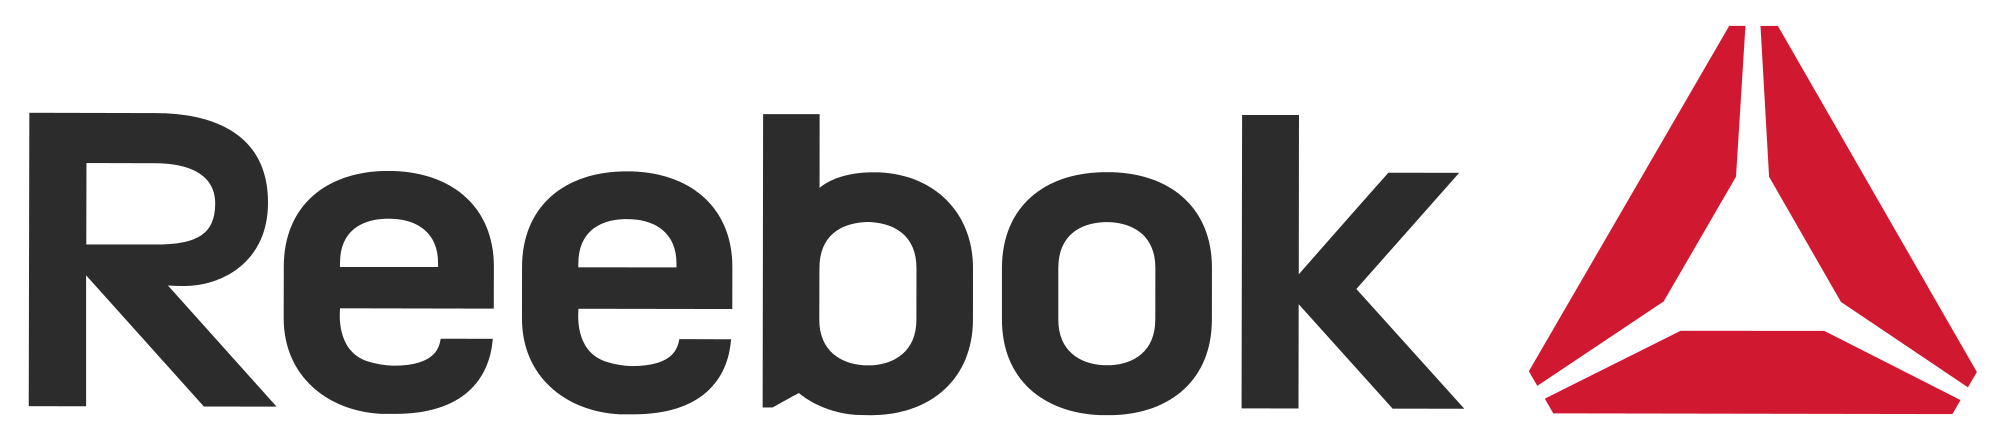 reebok-logo | Best Treadmill Reviews 2020